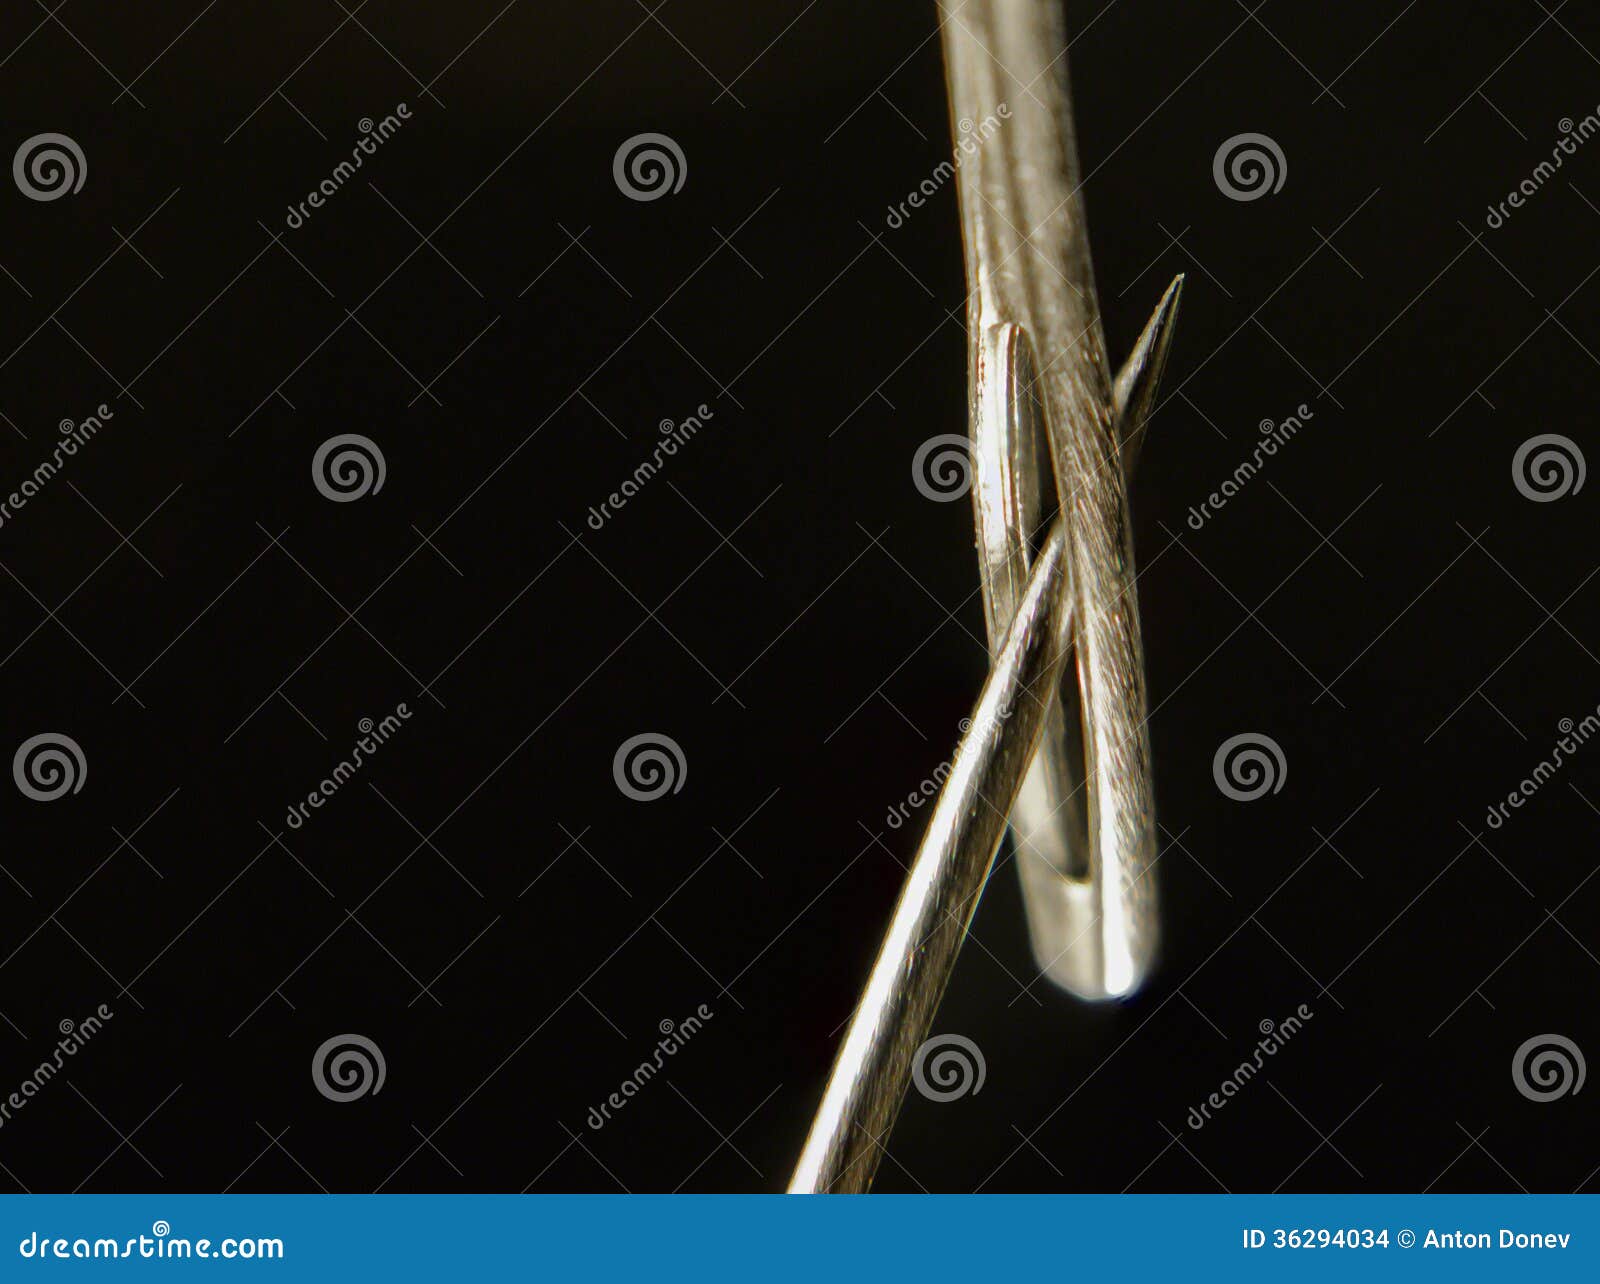 Two needles stock photo. Image of objectsequipment, tool - 36294034